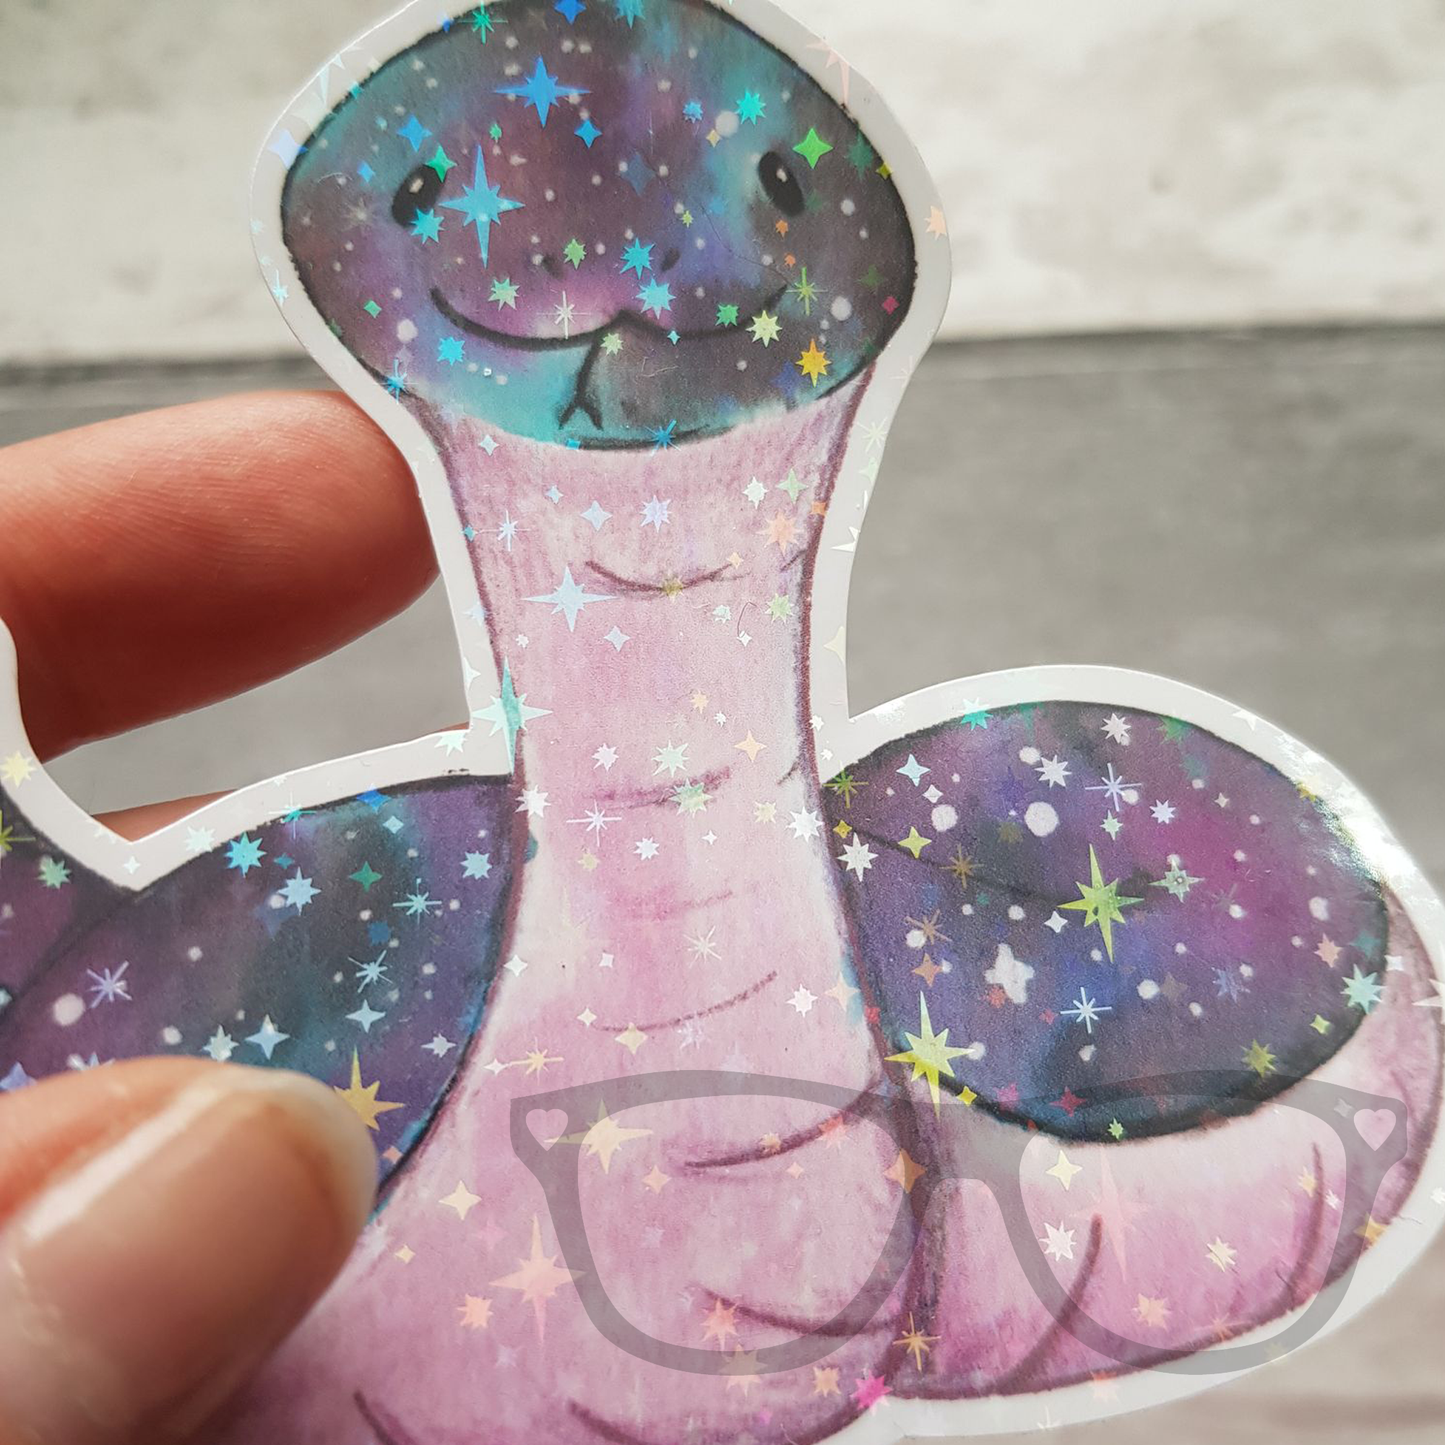 Snake vinyl sticker with star sparkles overlay close up